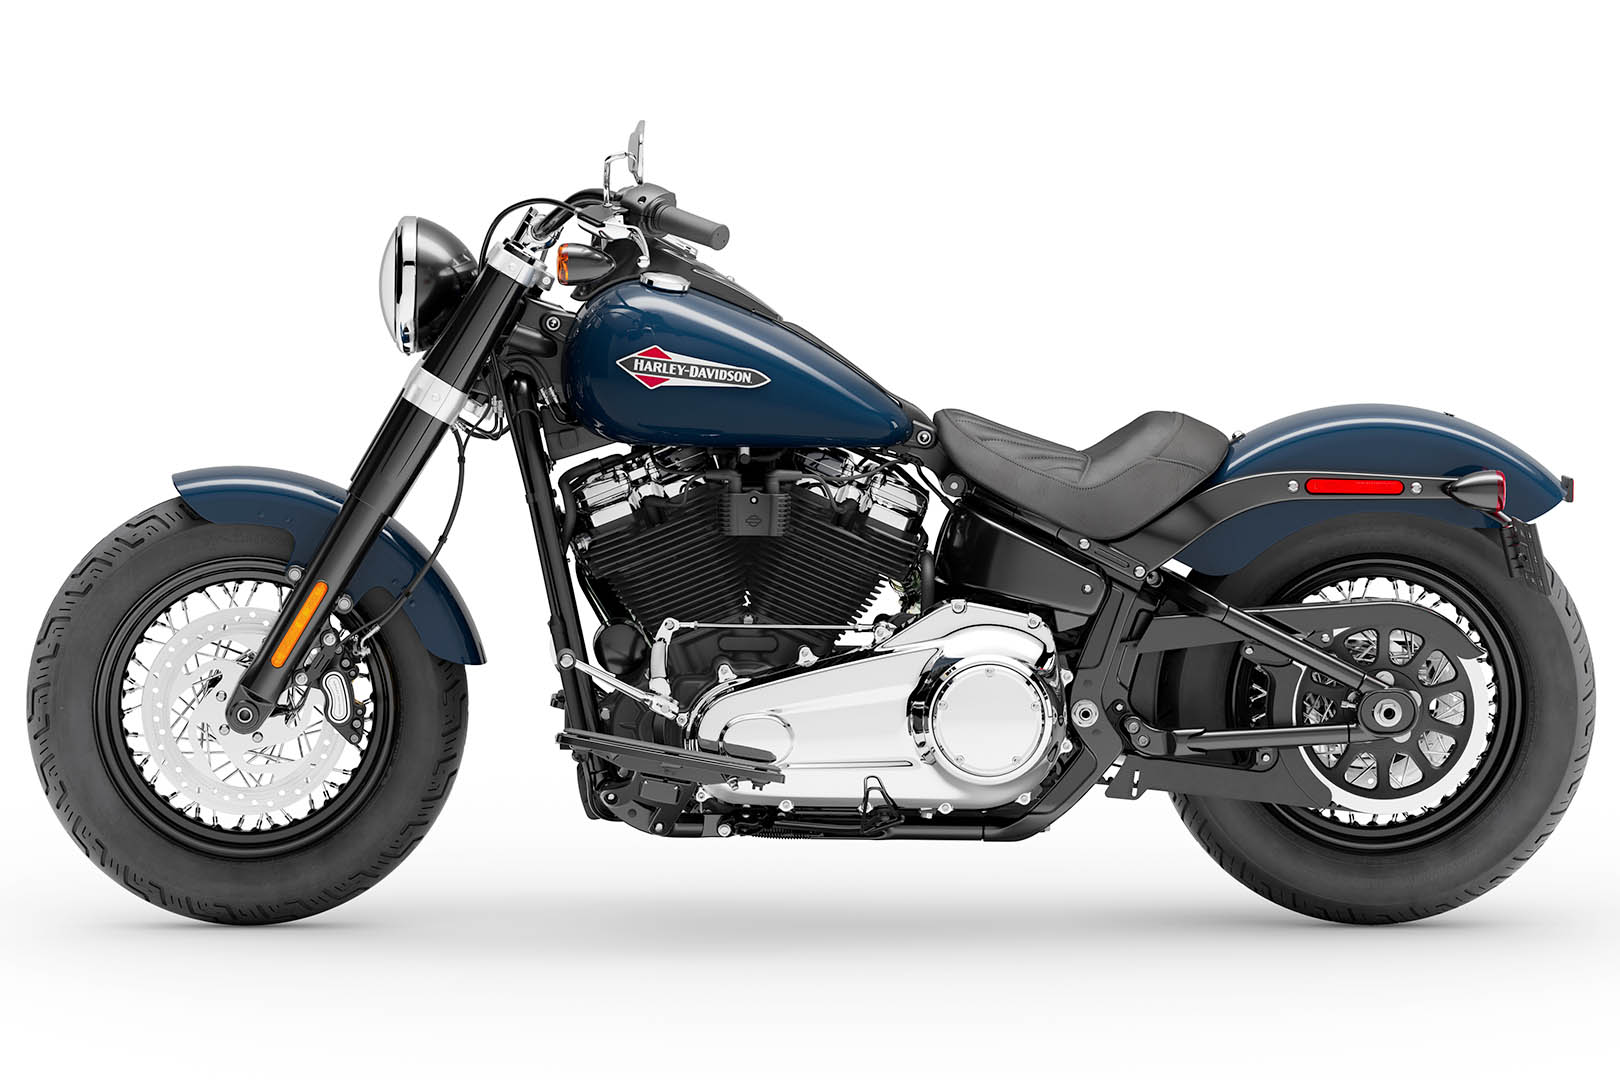 2020 Harley Davidson Softail Slim Buyer S Guide Specs Prices Gearopen Com